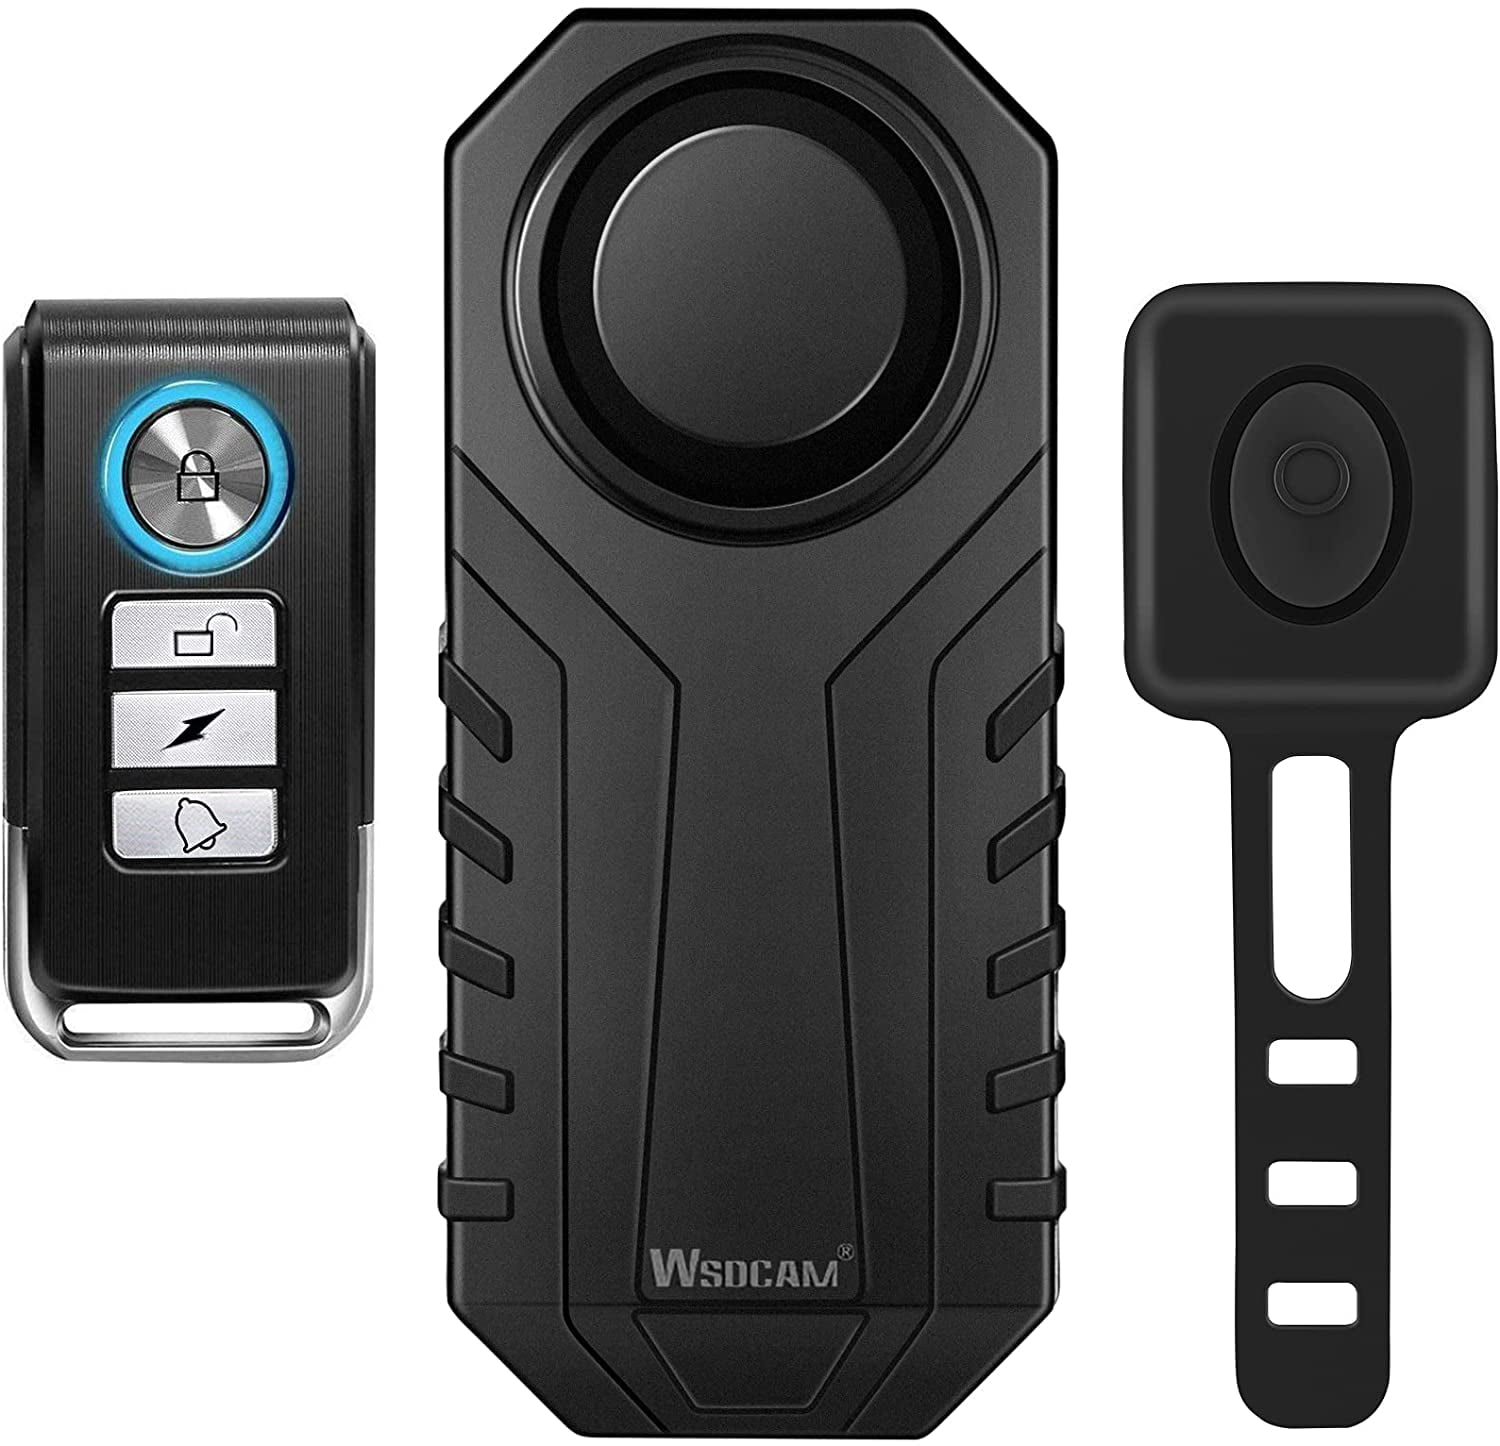 Wsdcam Bike Alarm Bicycle Horn Anti-Theft Waterproof Vibration Sensor  Outdoor Bike Accessories 